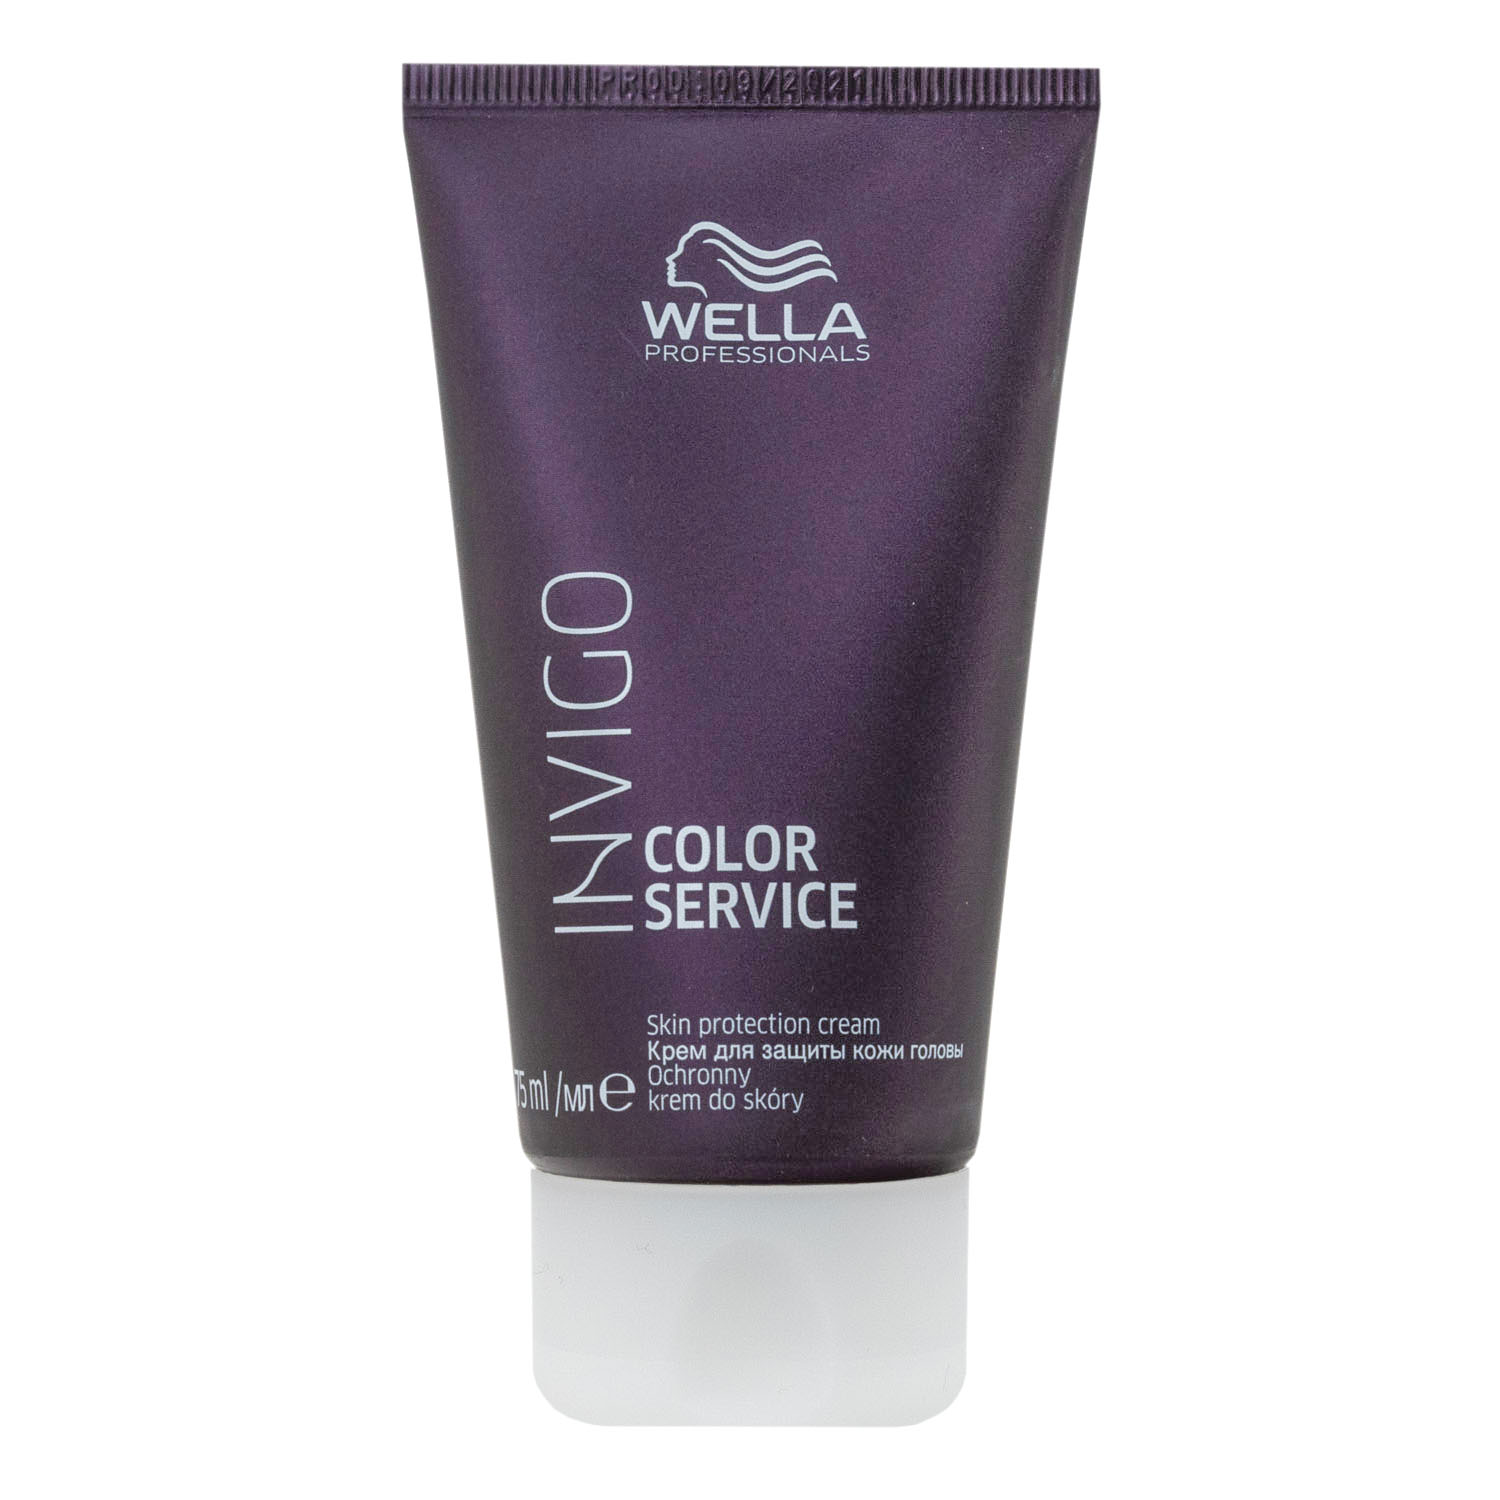 Wella Professionals Крем для защиты кожи головы, 75 мл (Wella Professionals, Окрашивание)